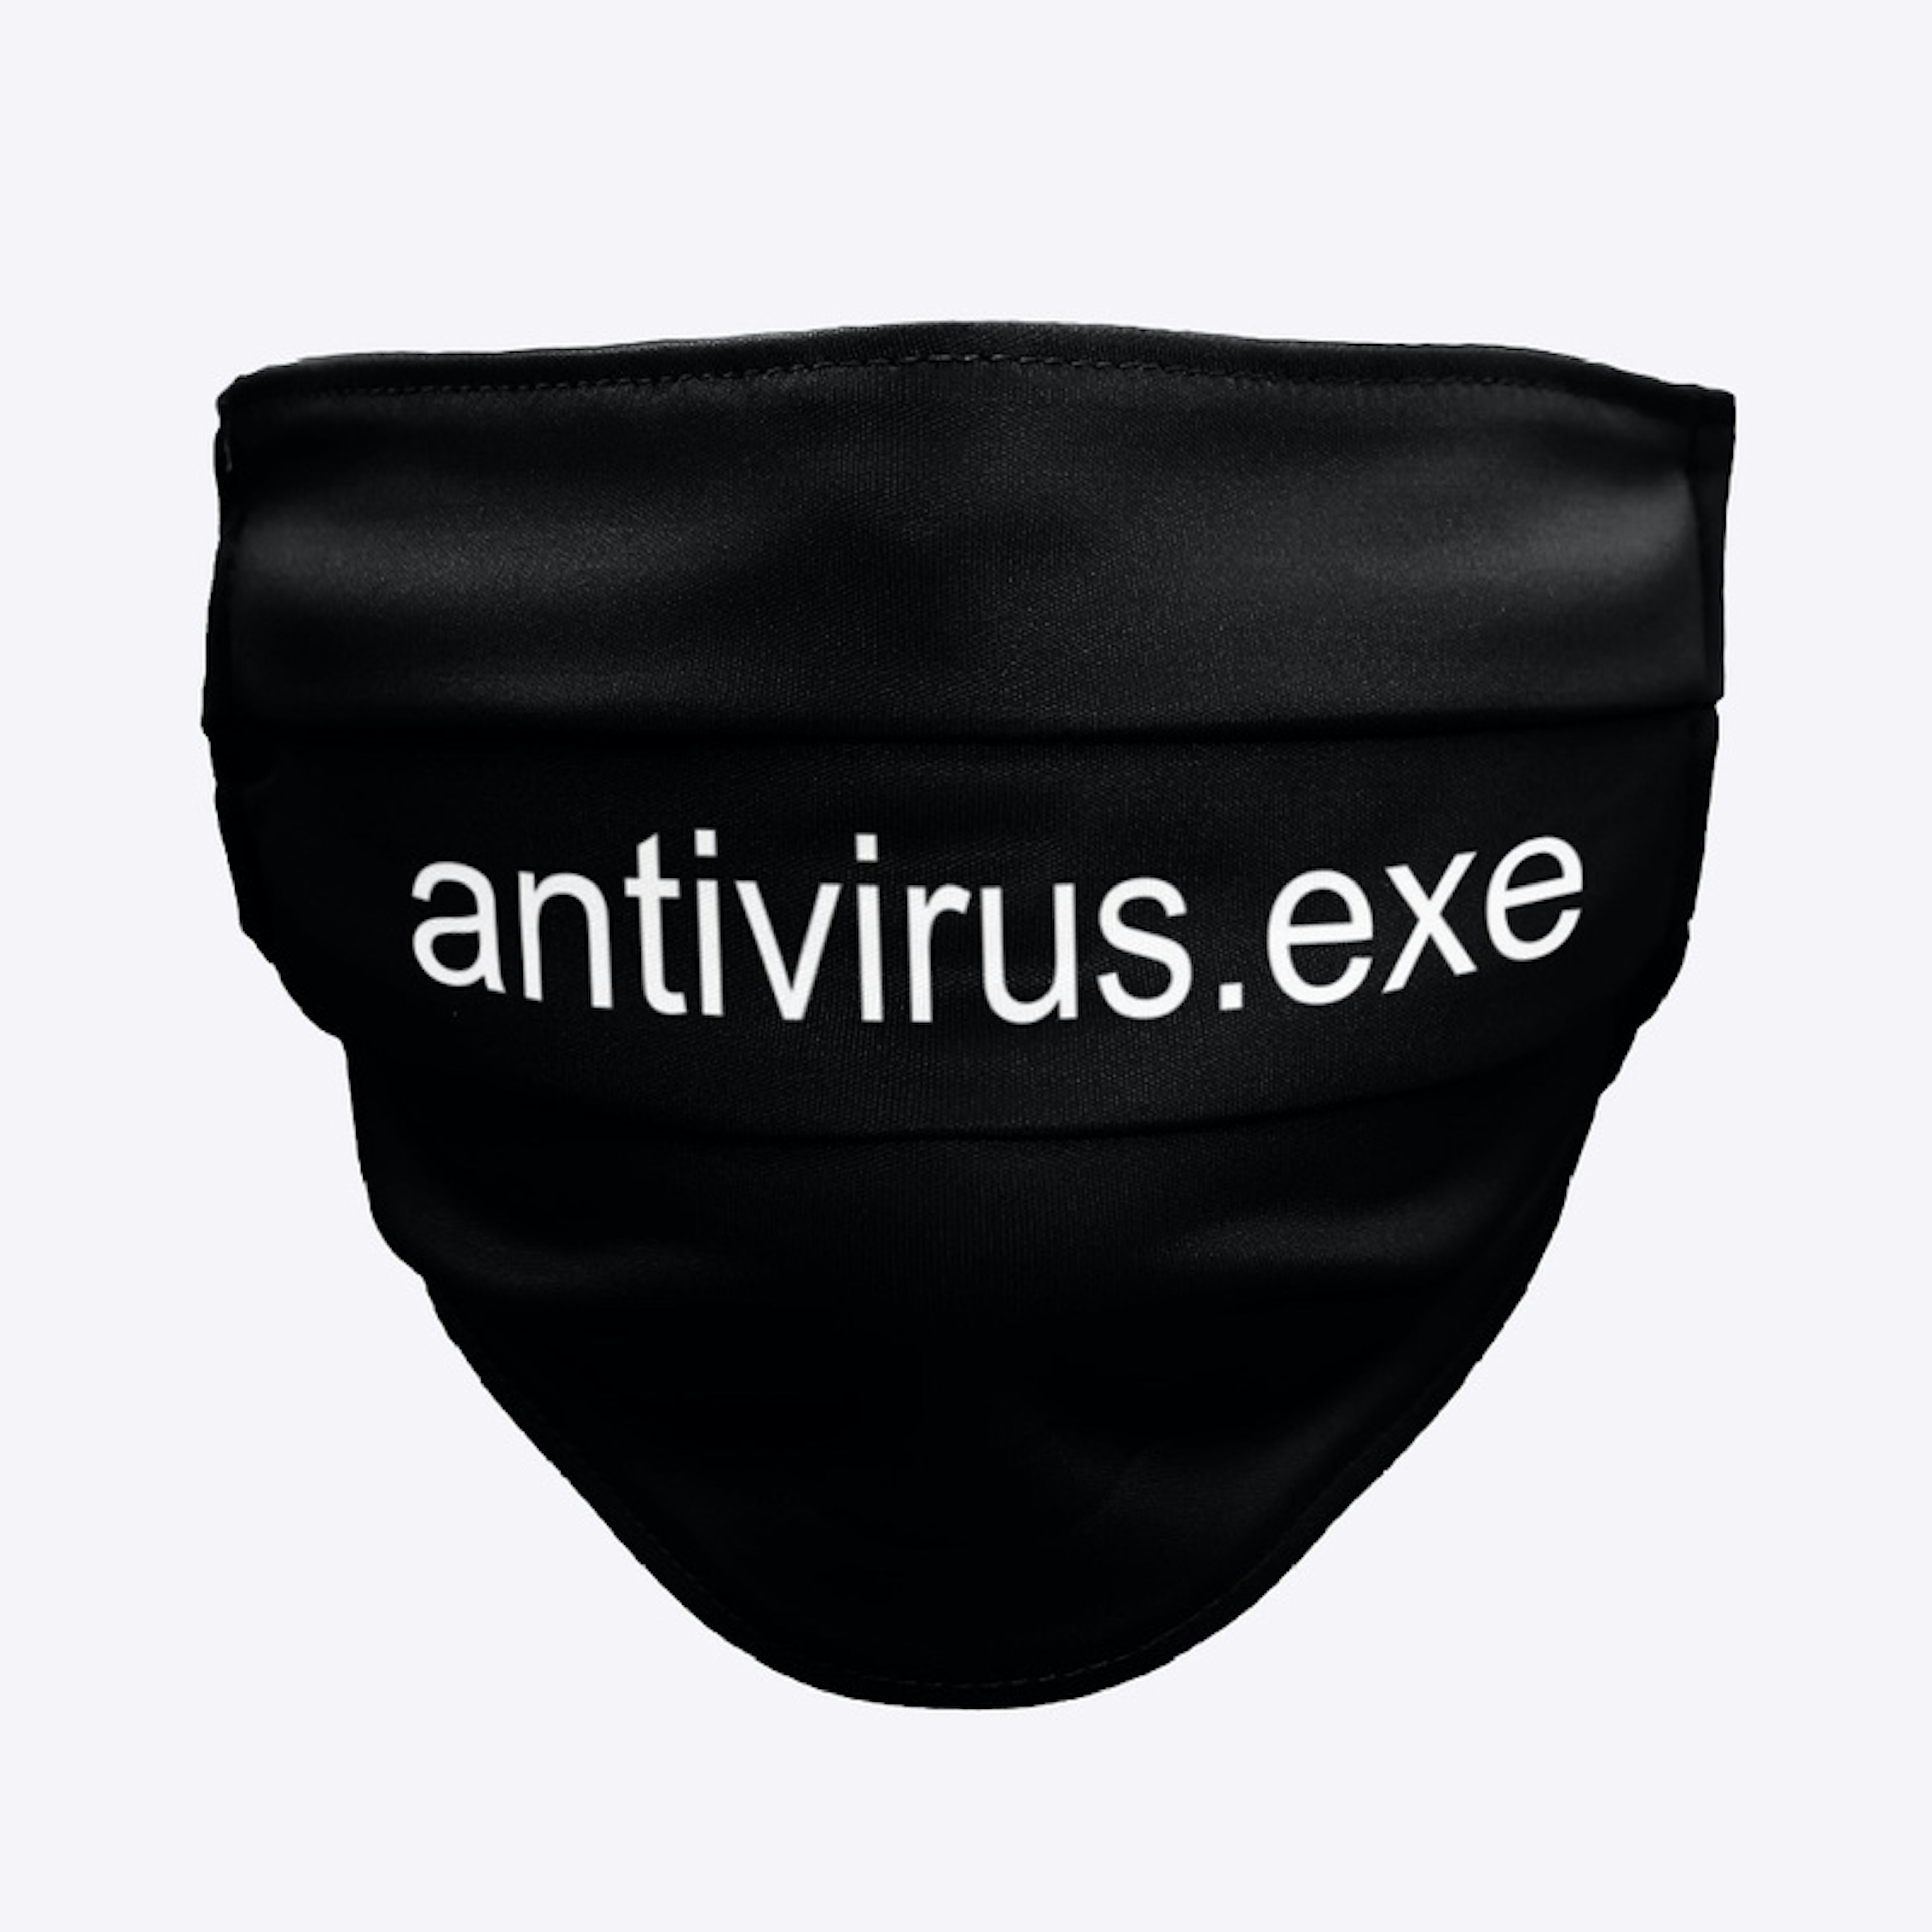 antivirus.exe COVID mask